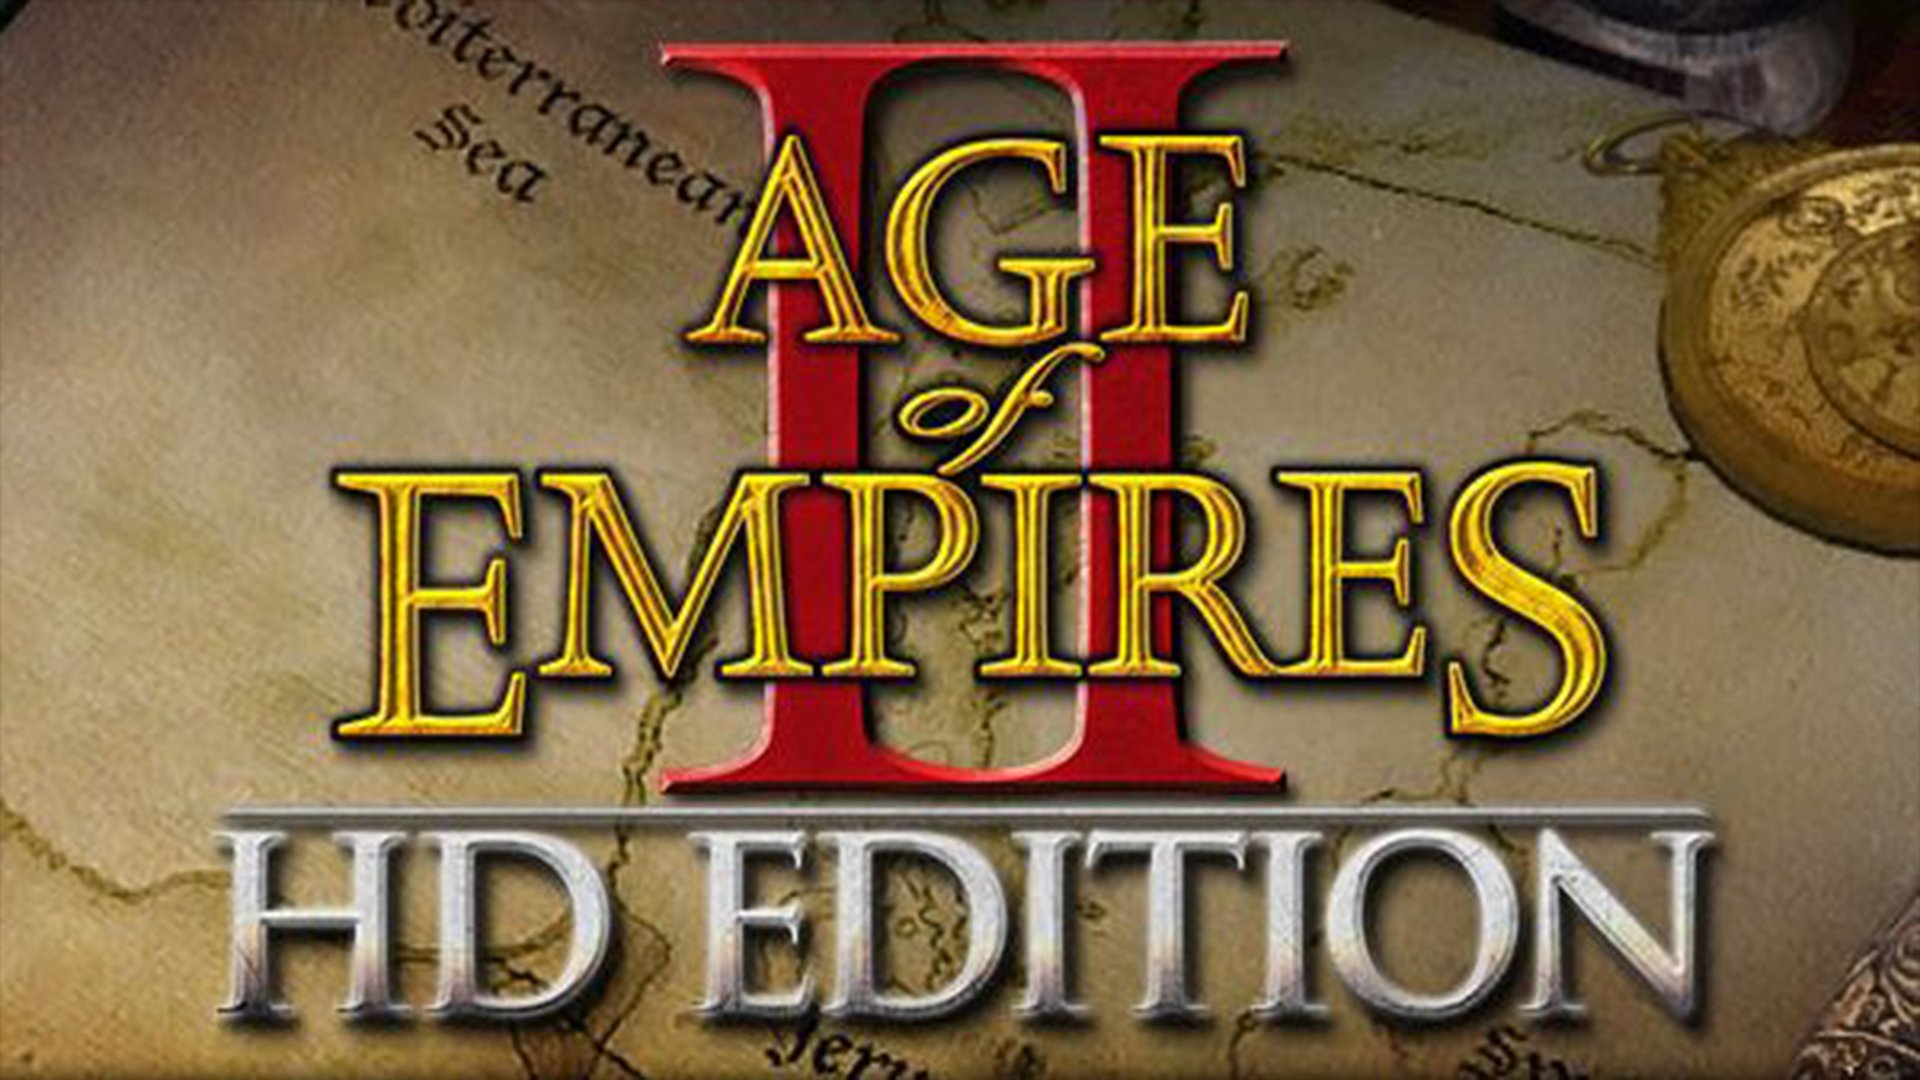 age of empires ii hd 4k